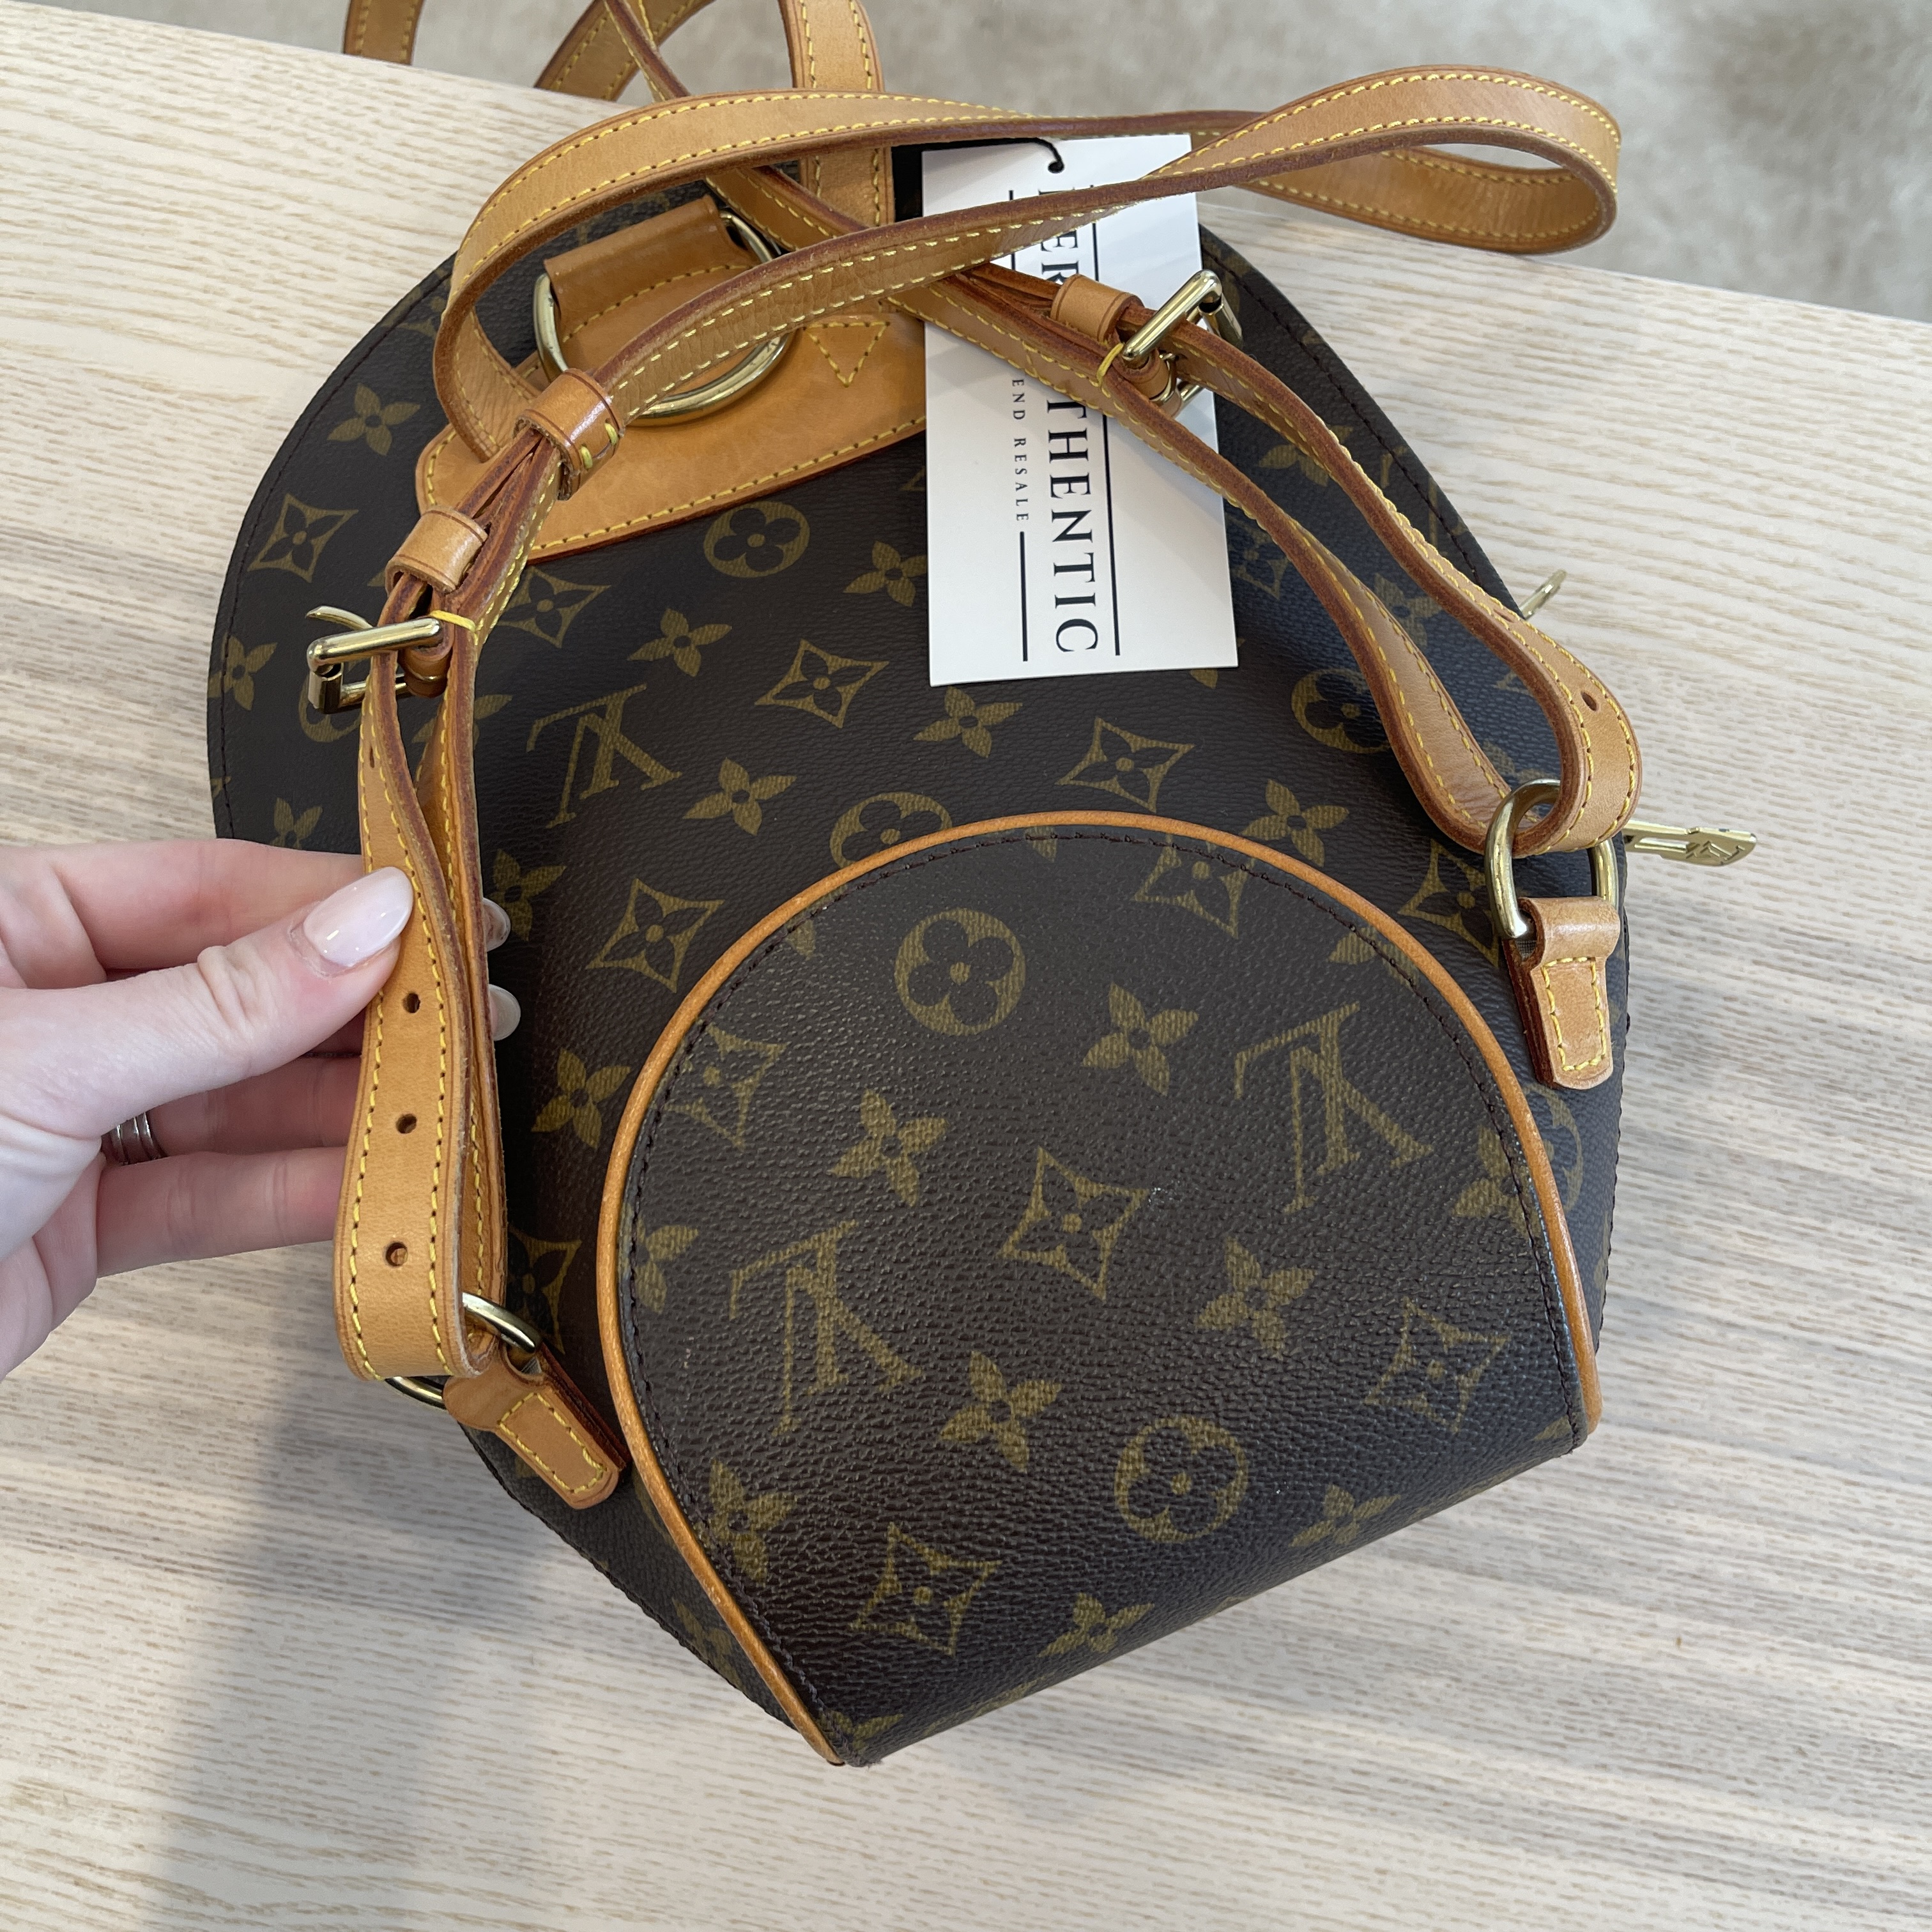 Louis Vuitton monogram ellipse sac a dos backpack at Jill's